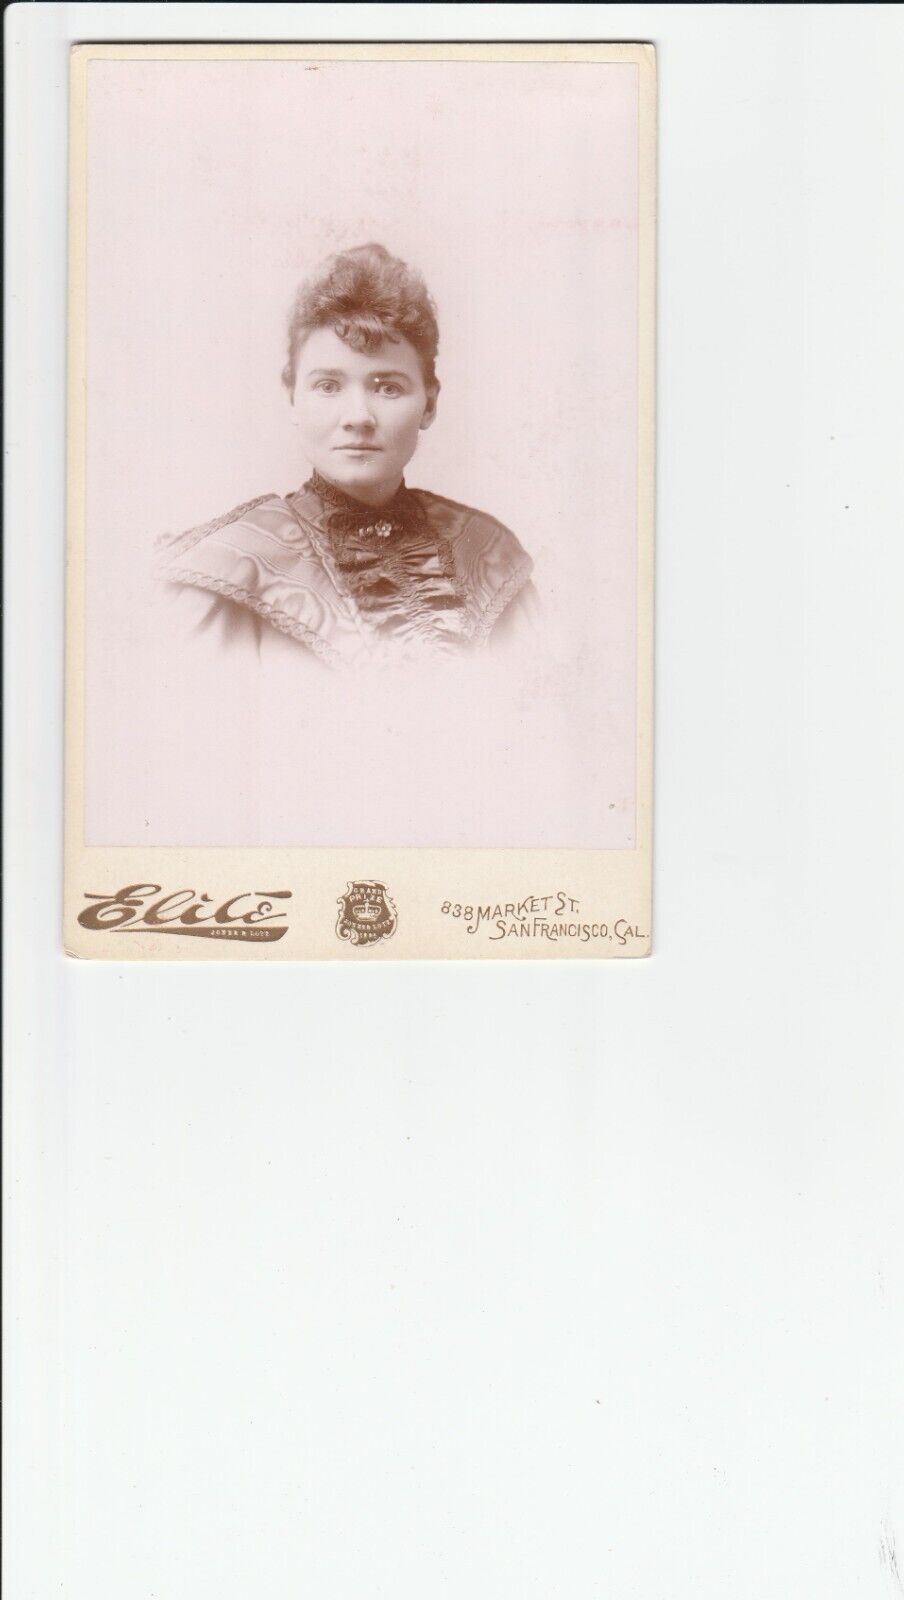 Cabinet Card 1880 S.F. CA,ID VICTORIAN LADY FLOWER BROACH BAR CURLY BANGS